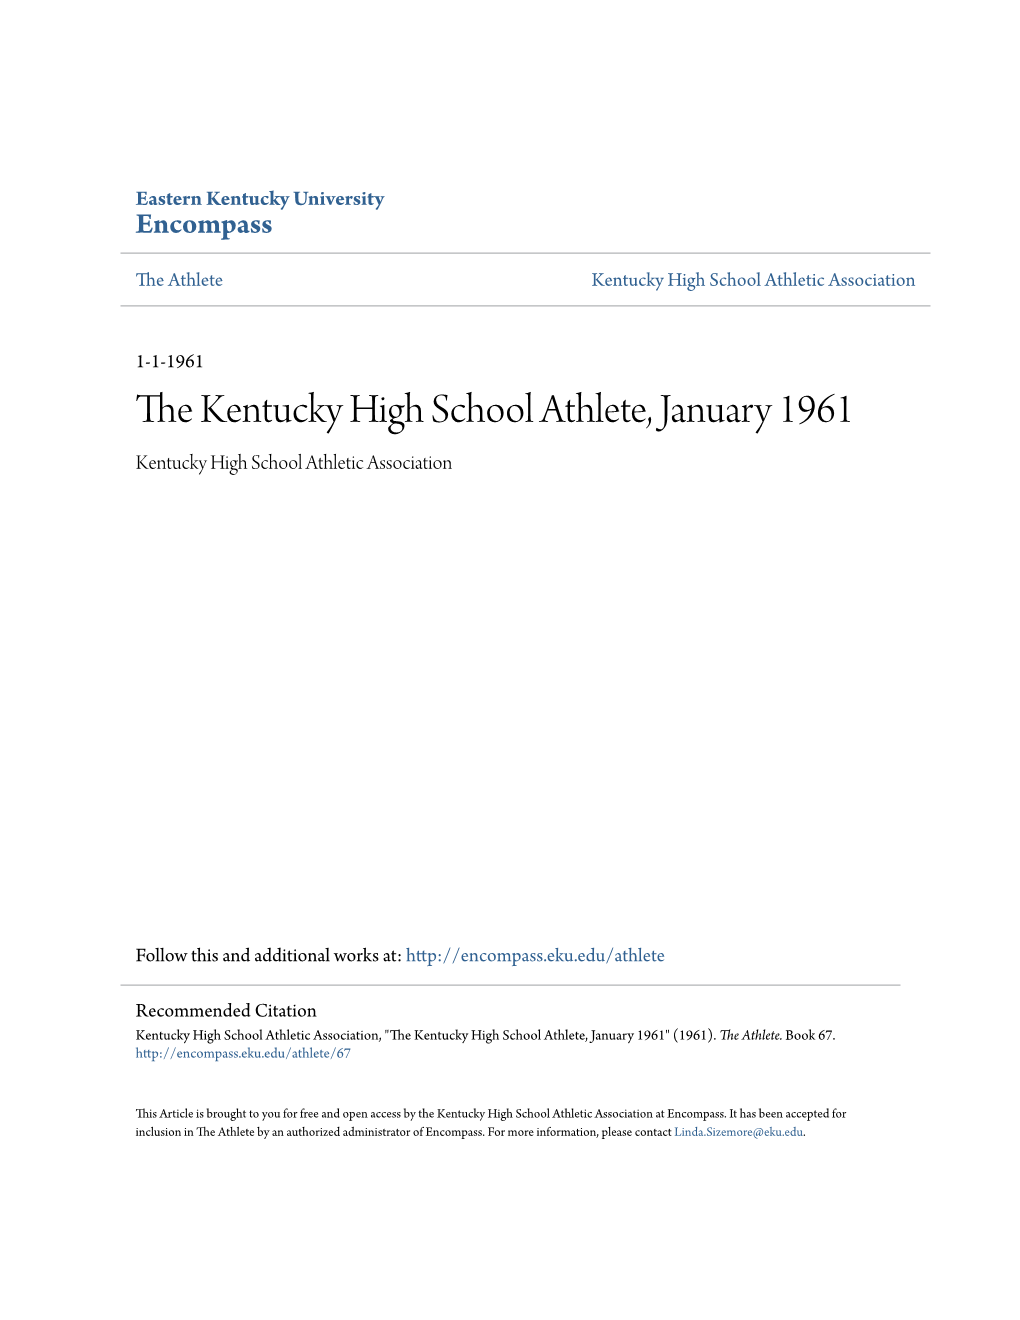 The Kentucky High School Athlete, January 1961 Kentucky High School Athletic Association